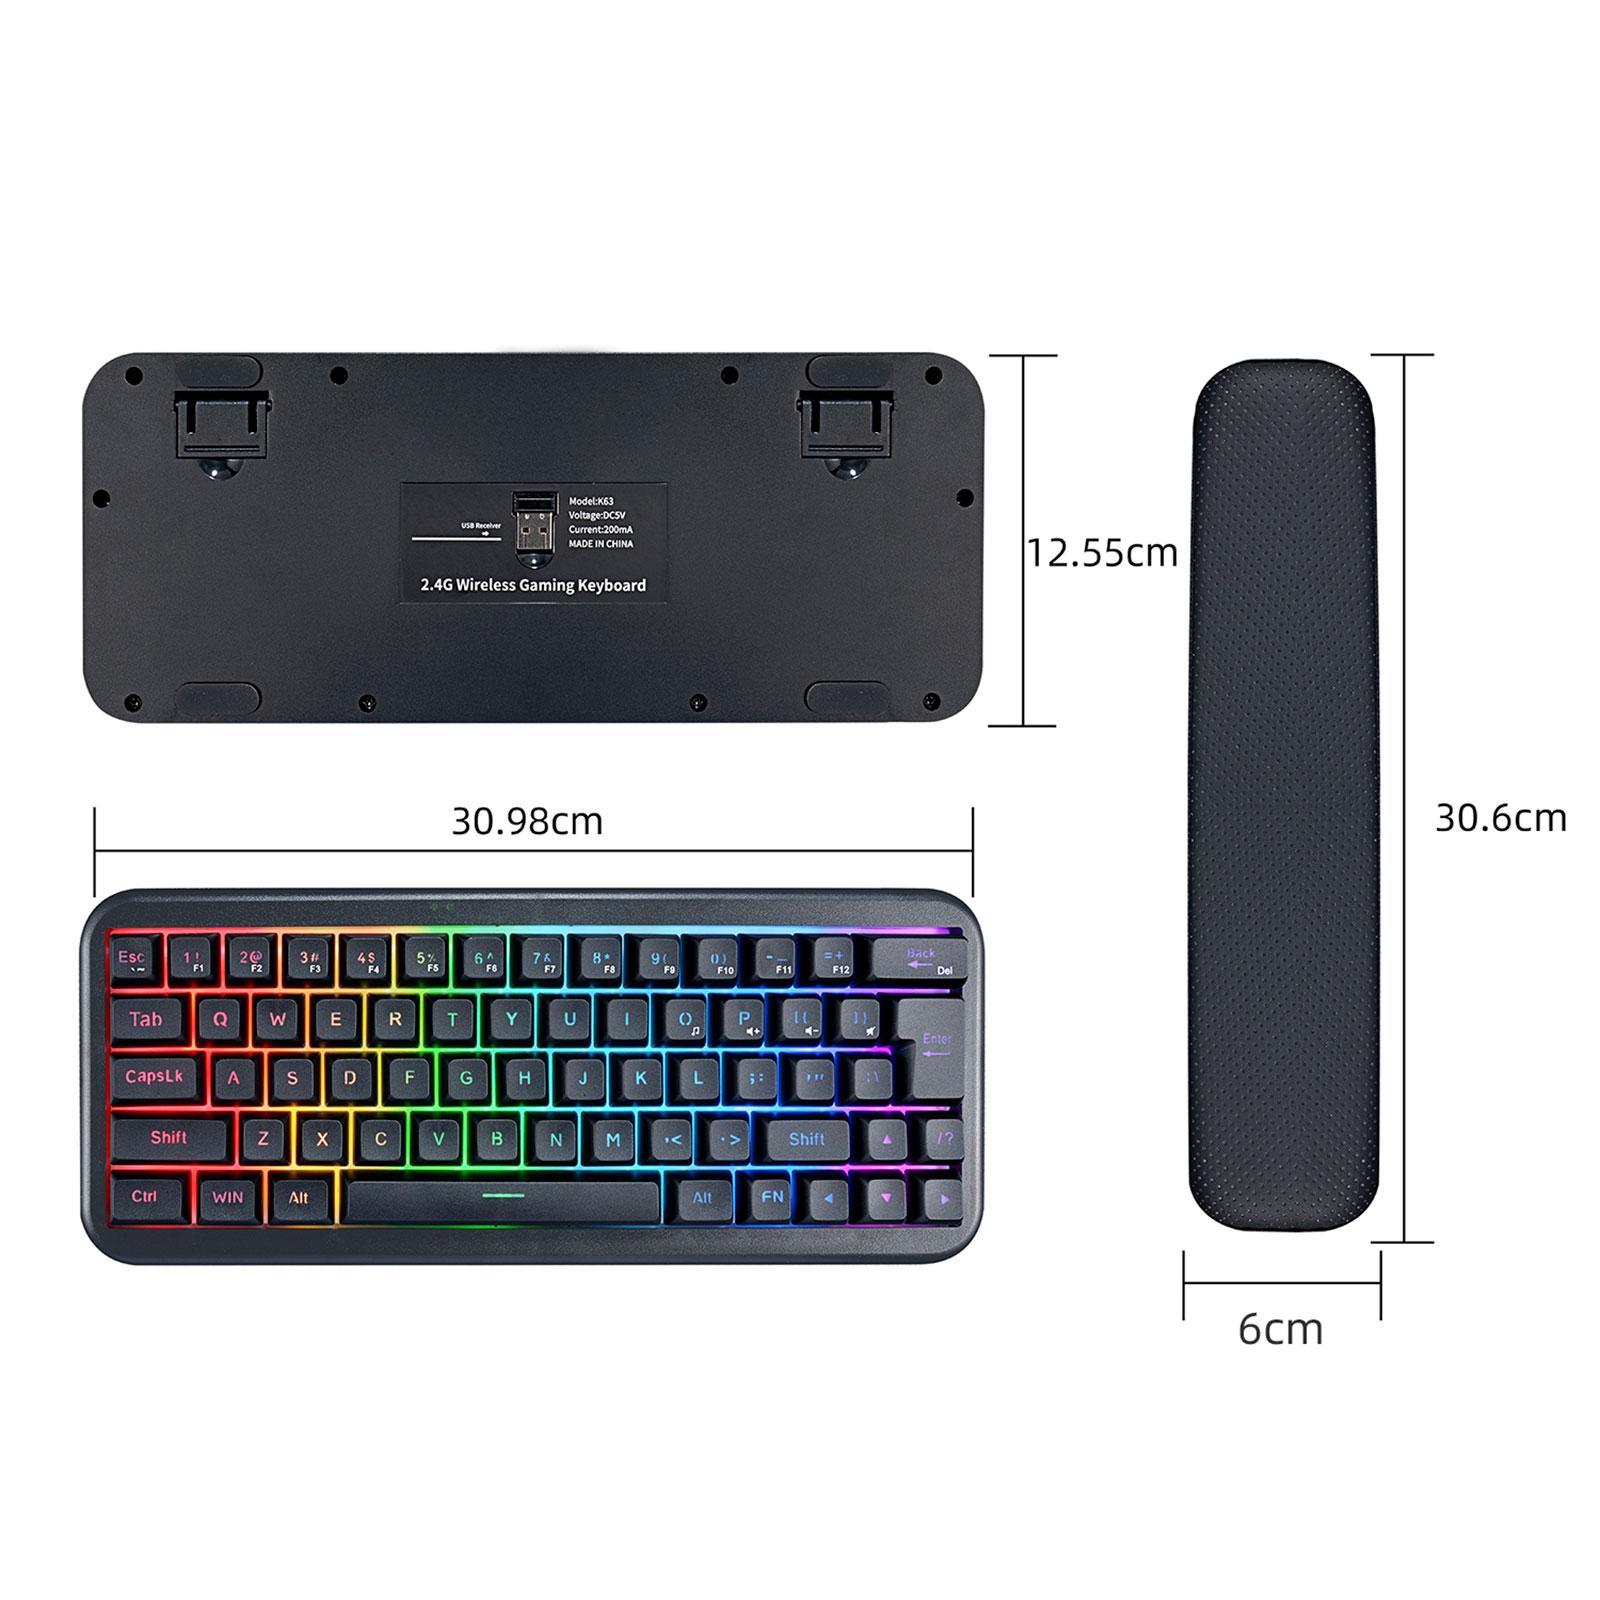 2.4G Wireless Keyboard 63 Keys W/ Wrist Cushion Support for Home Office